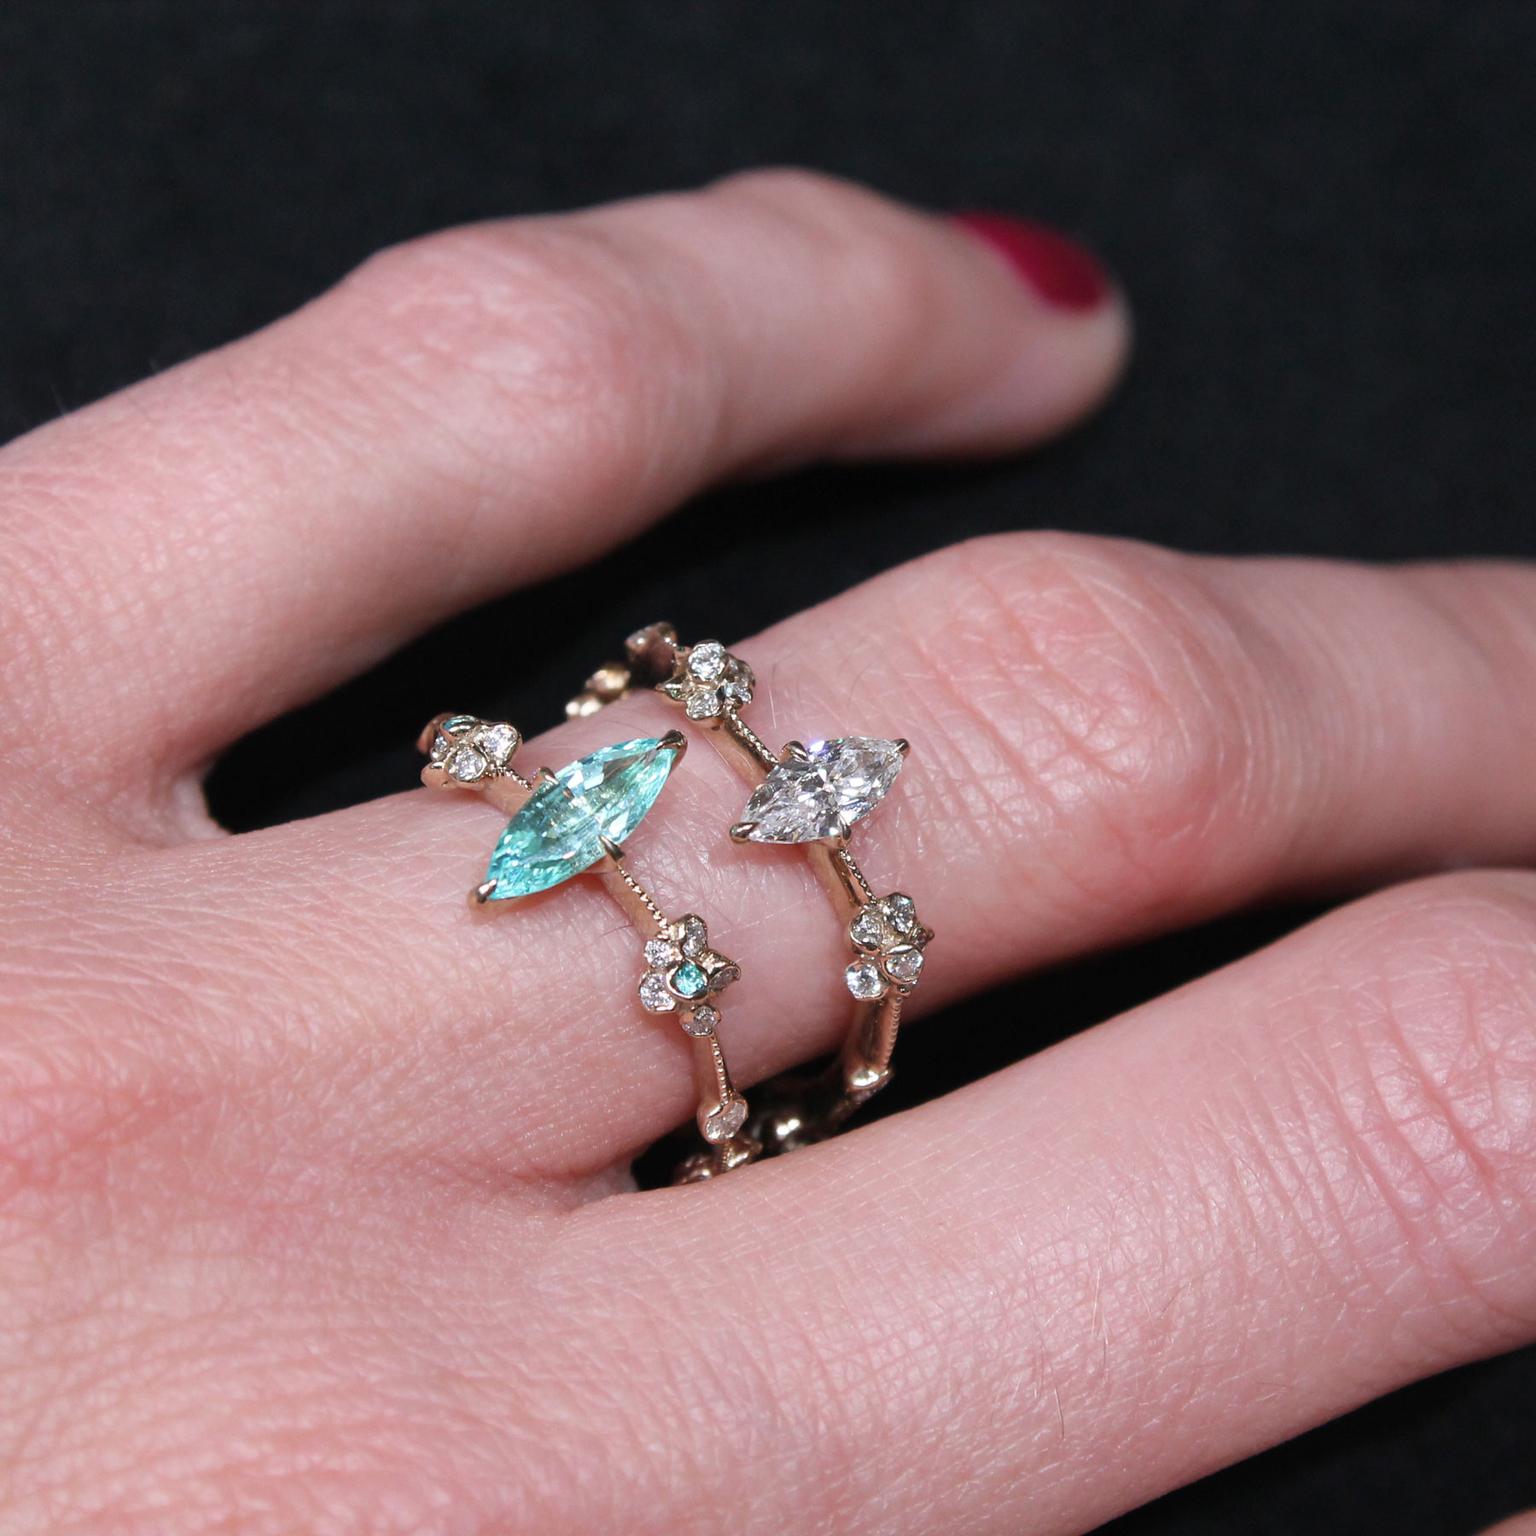 Kataoka marquise cut diamond solitaire engagement ring